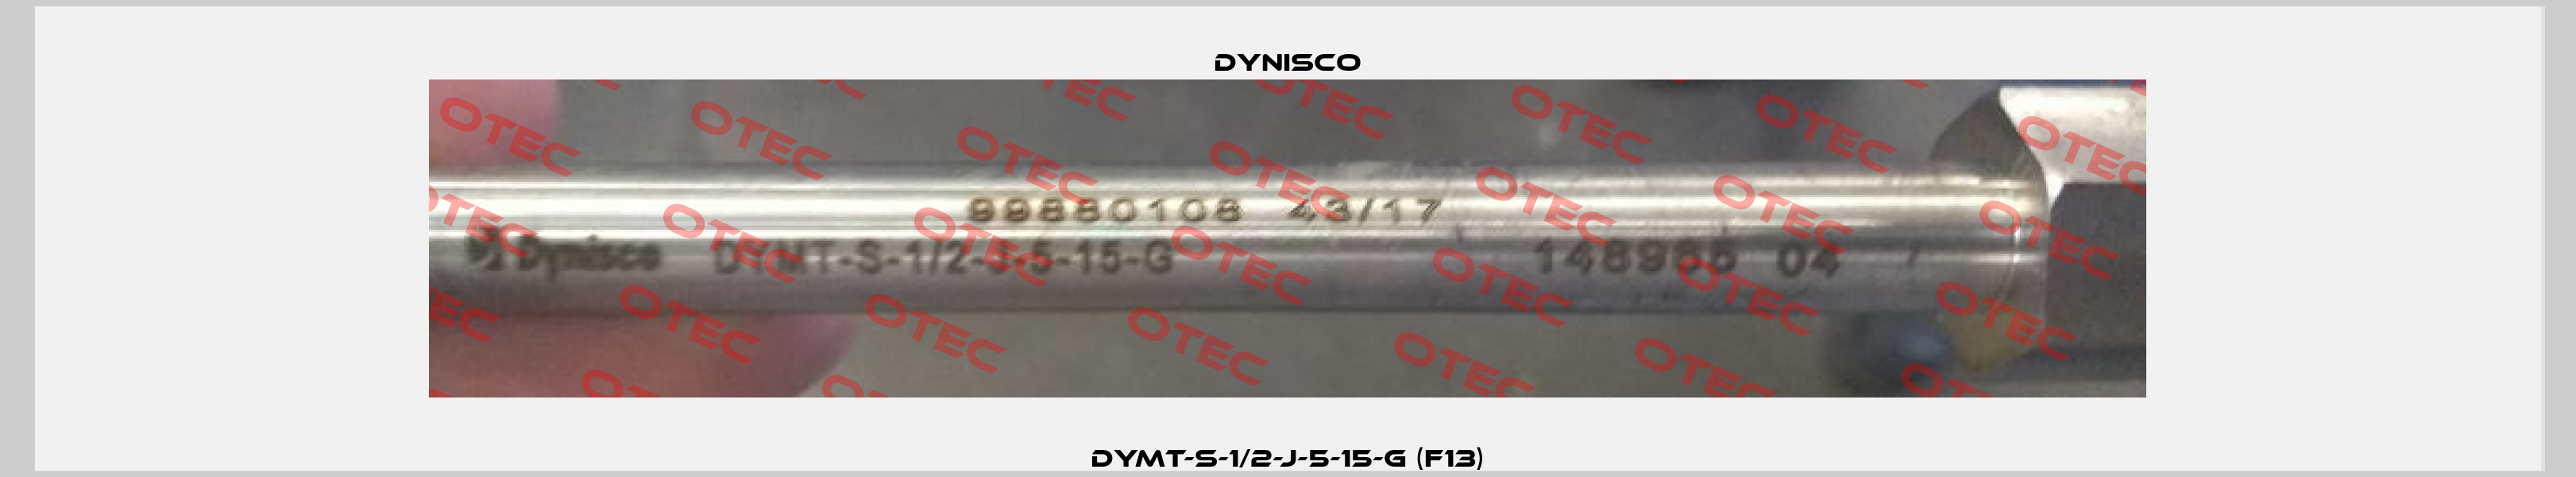 DYMT-S-1/2-J-5-15-G (F13) Dynisco